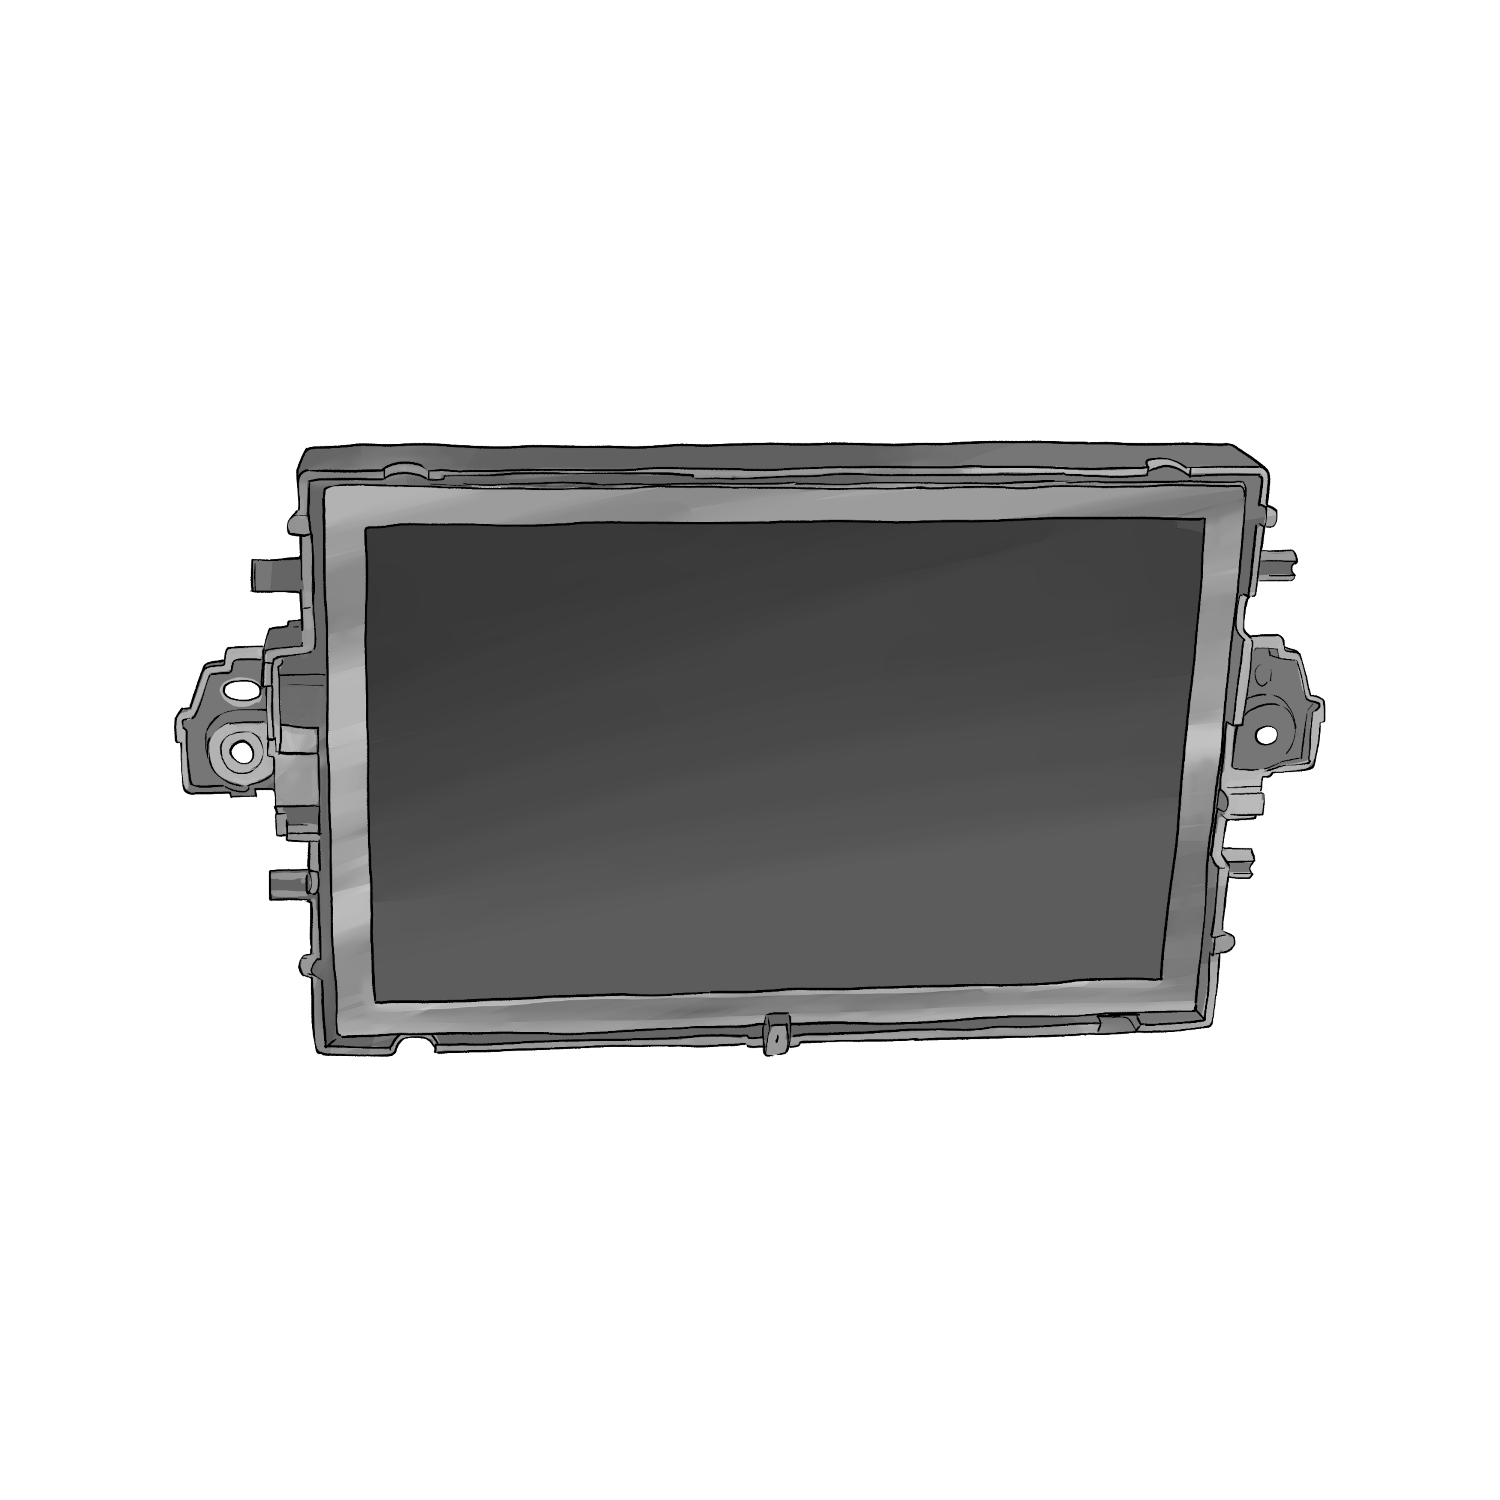  Artikelbild 1 des Artikels “VisControl LCD “